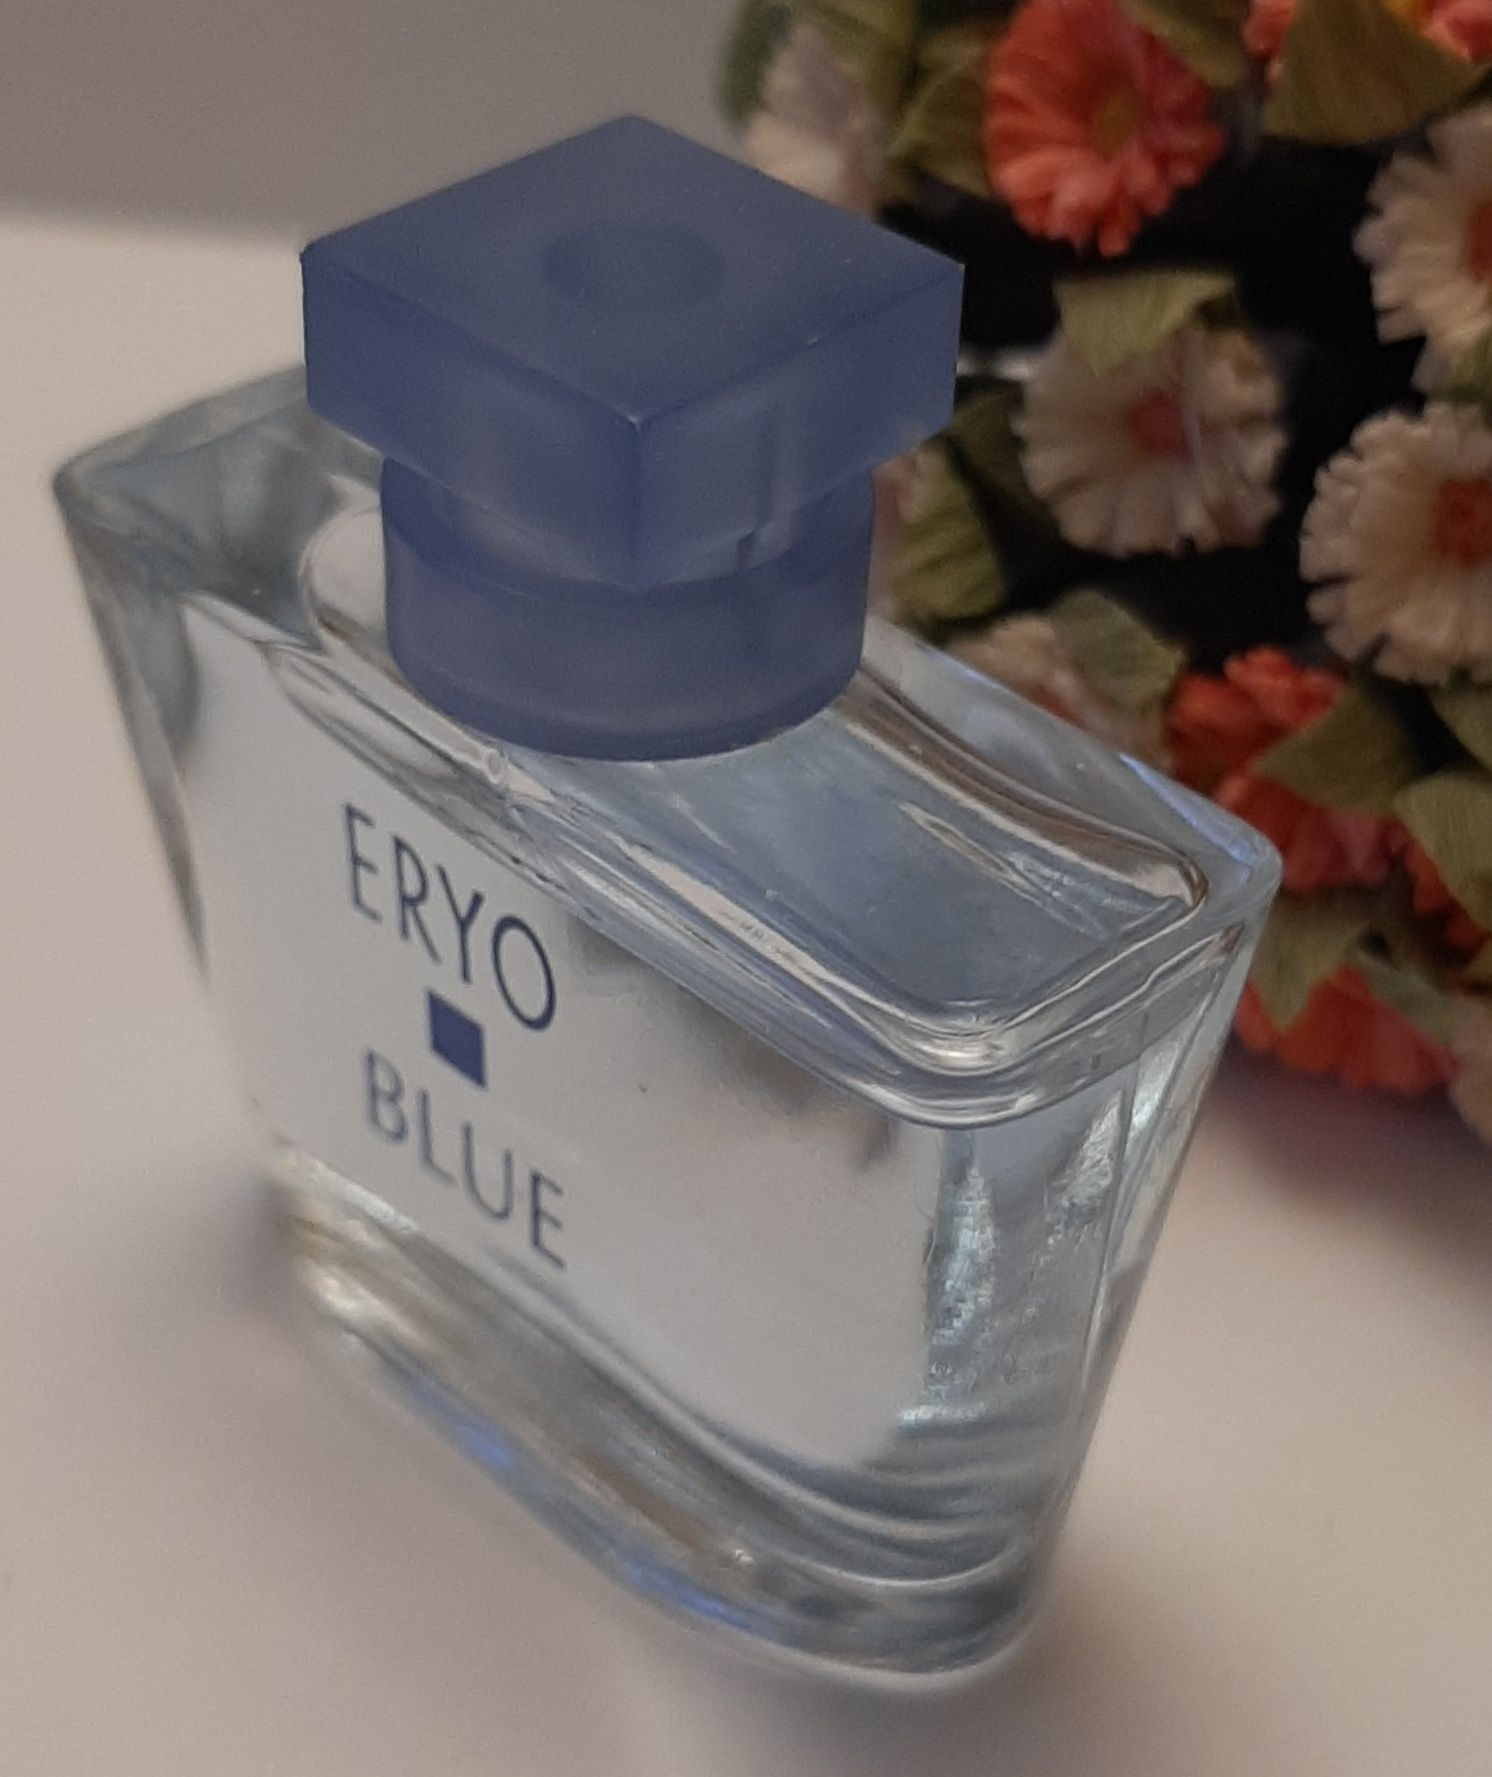 Yves Rocher Eryo Blue edt 7,5 ml, miniatura, vintage